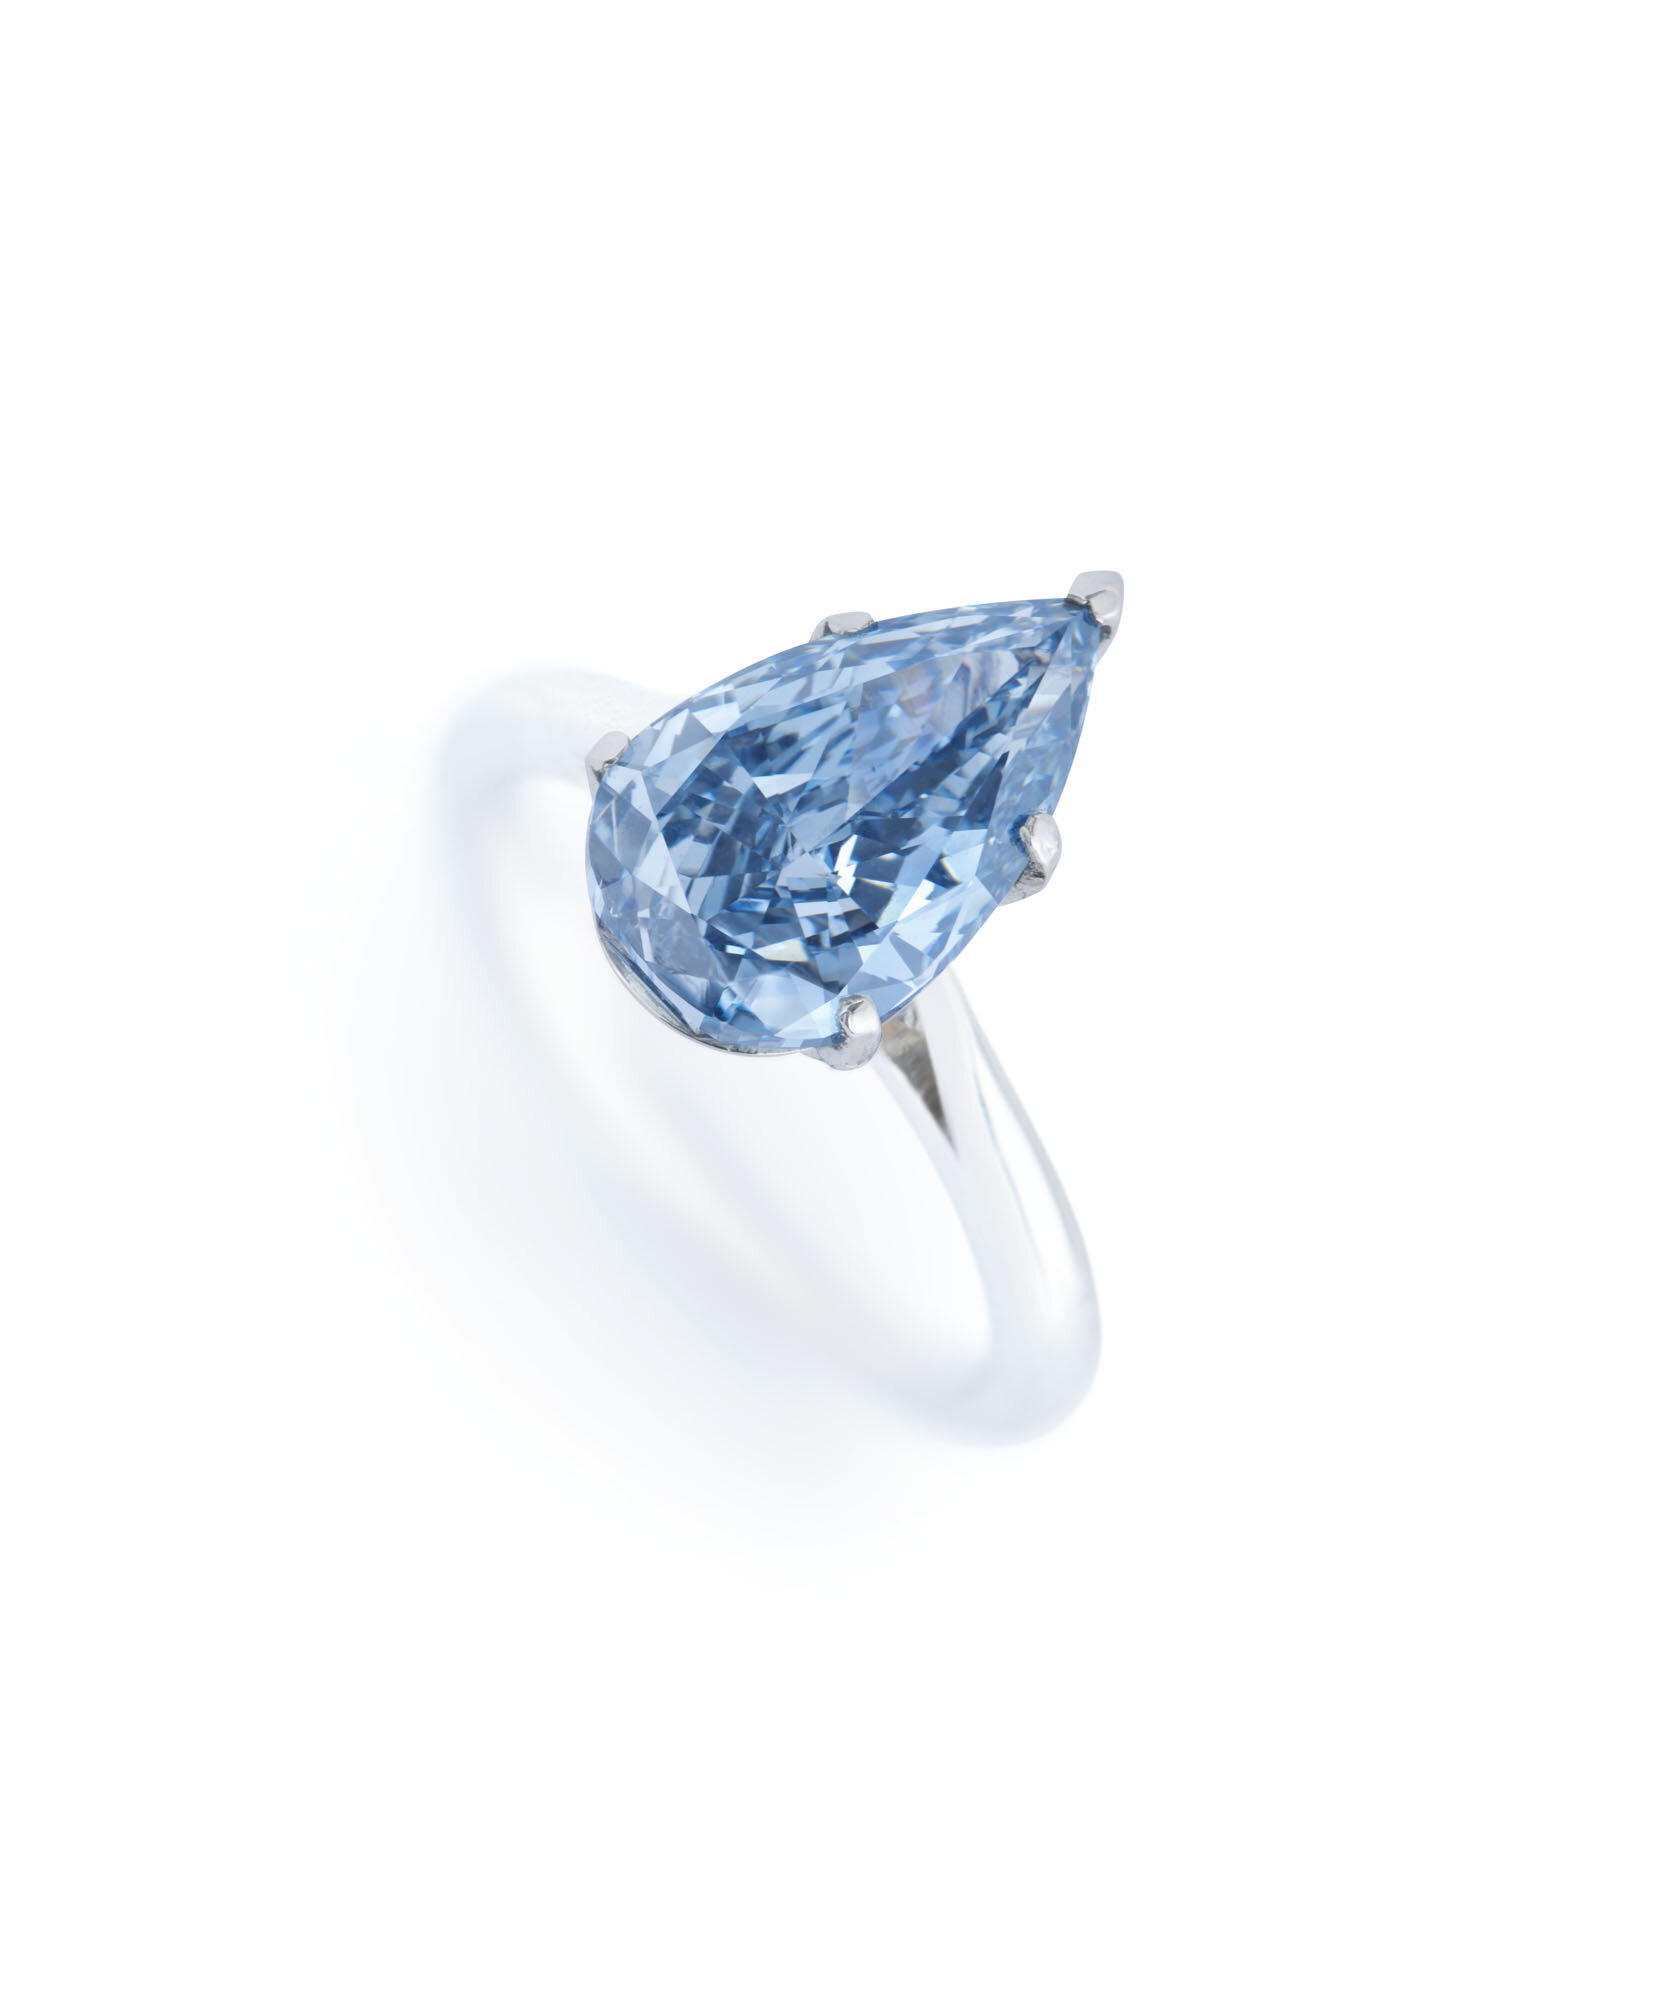 3.96 Carat Fancy Deep Blue Diamond Ring